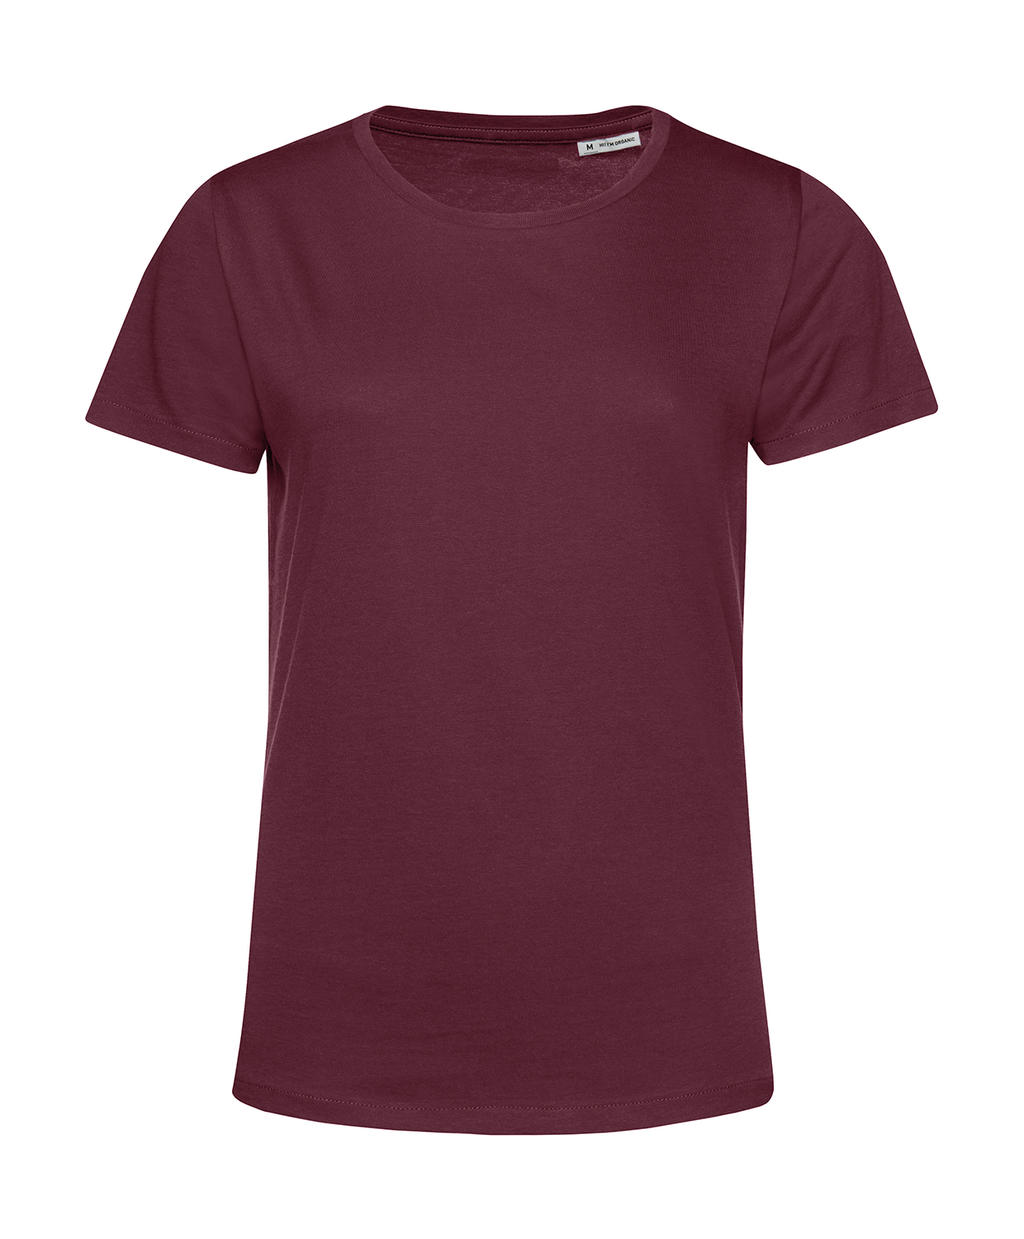 Tričko dámské BC Organic Inspire E150 - tmavě červené, L